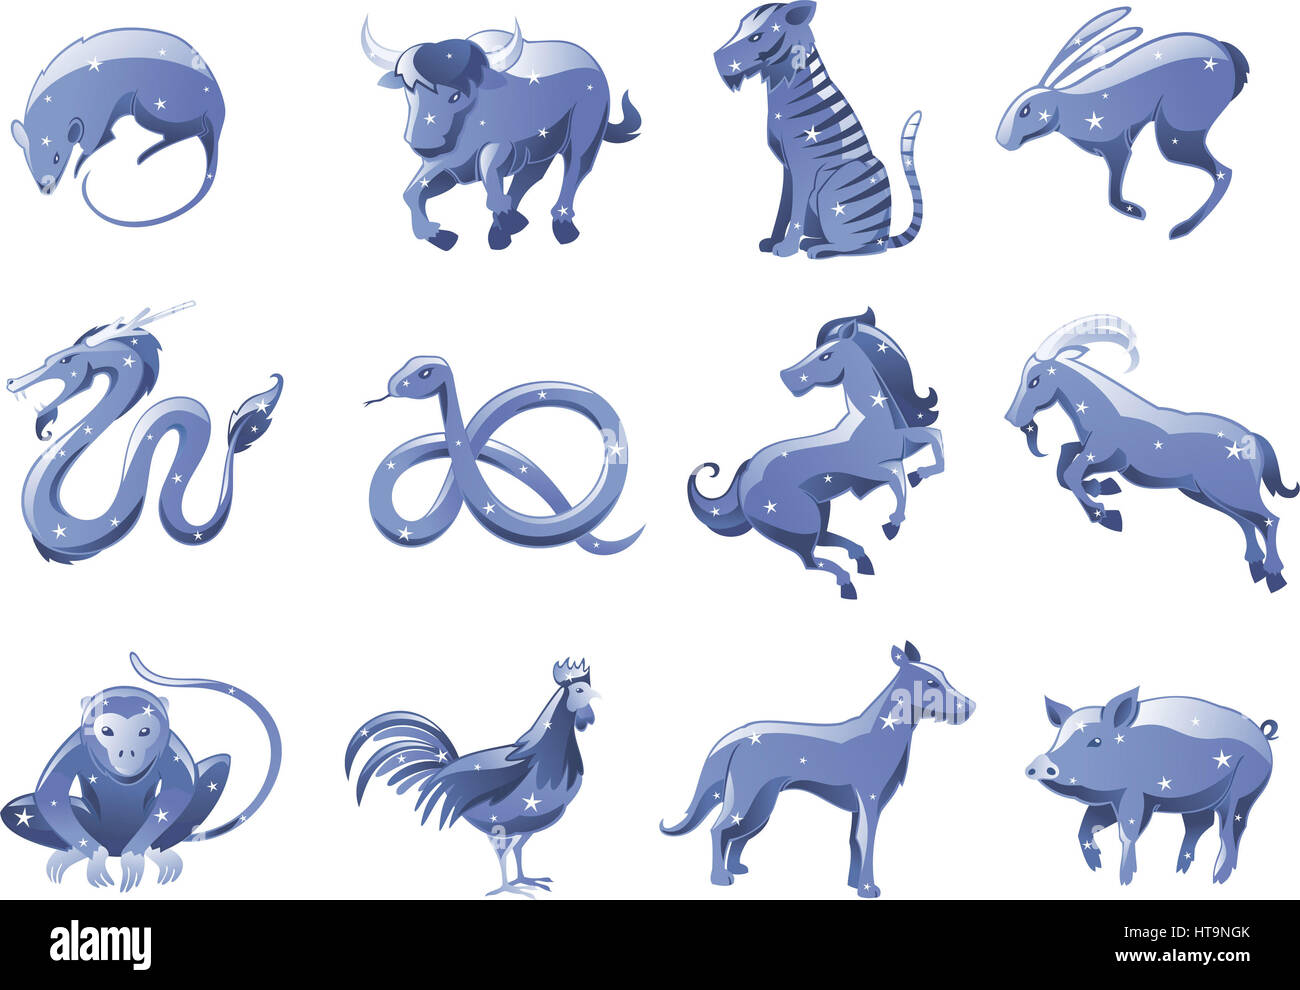 astrology animals symbols